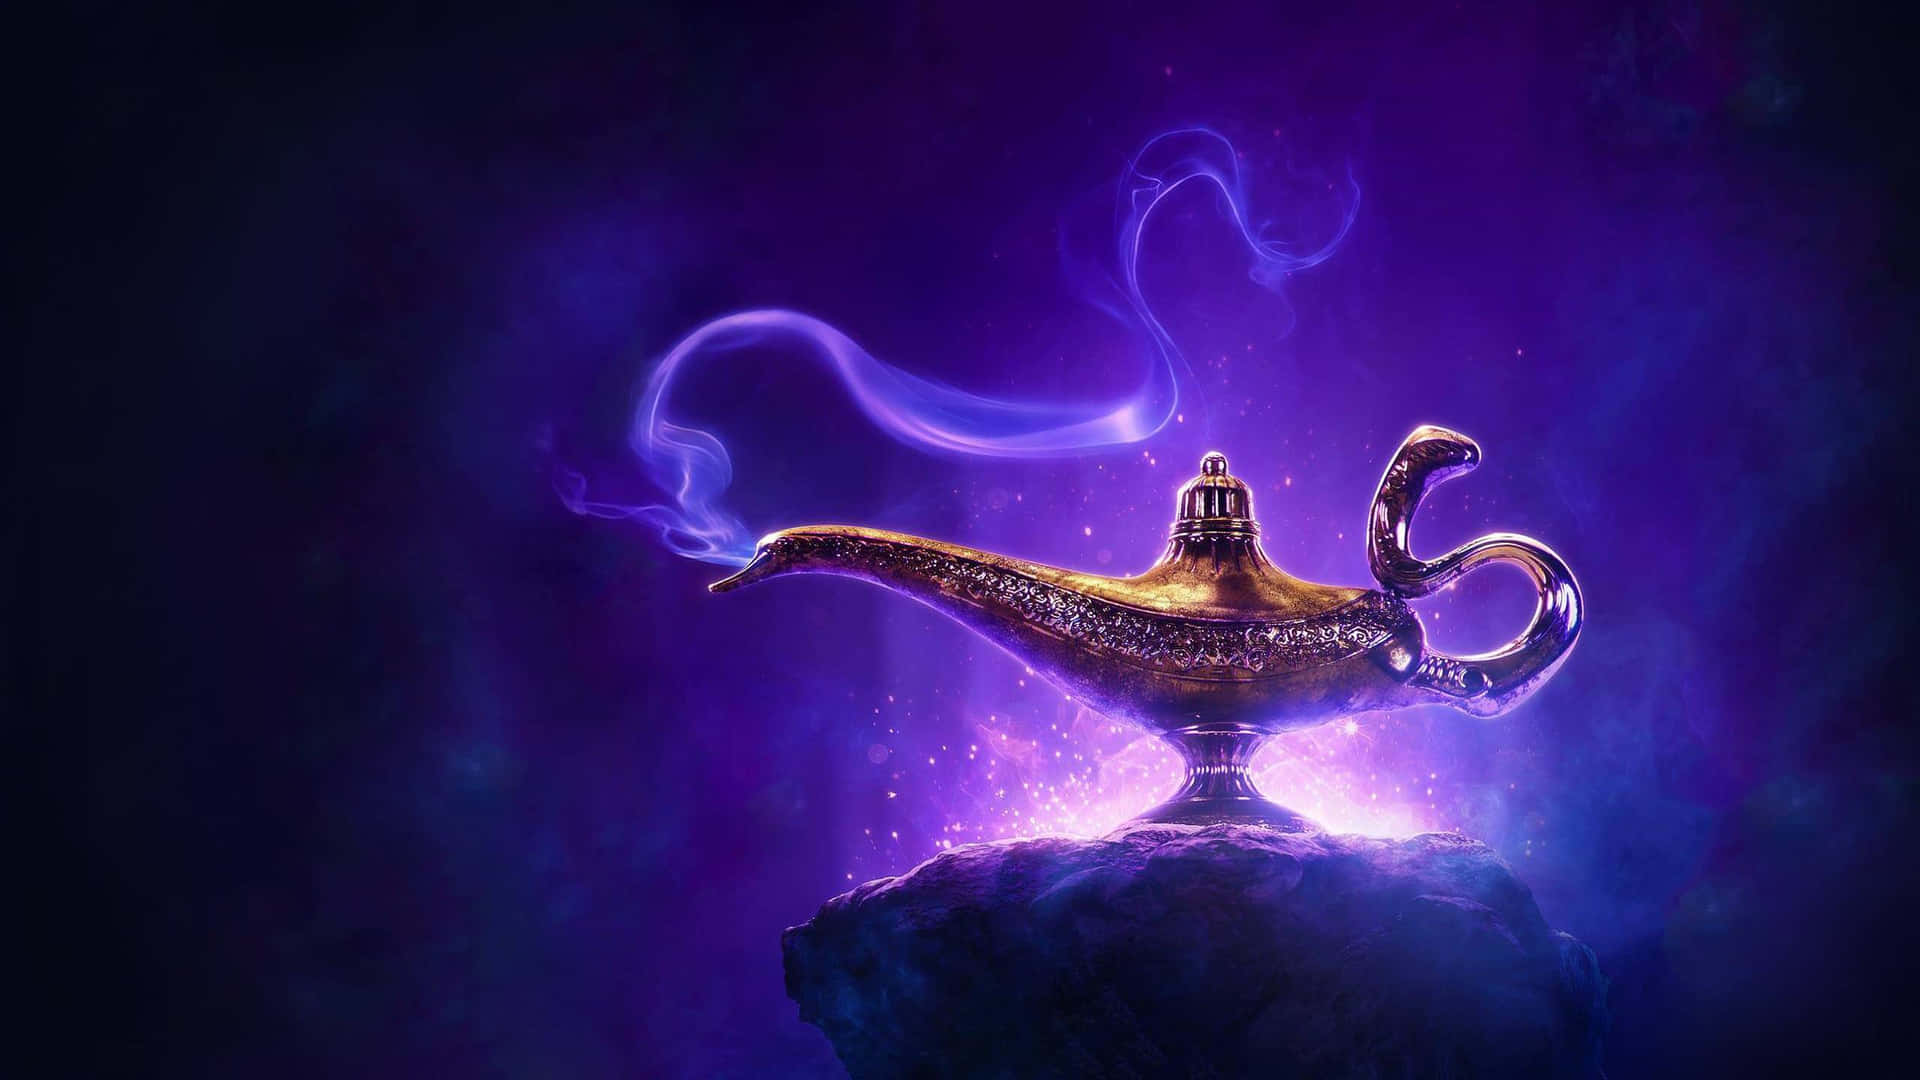 Sfondodisney Aladino - Lampada Magica 1440p